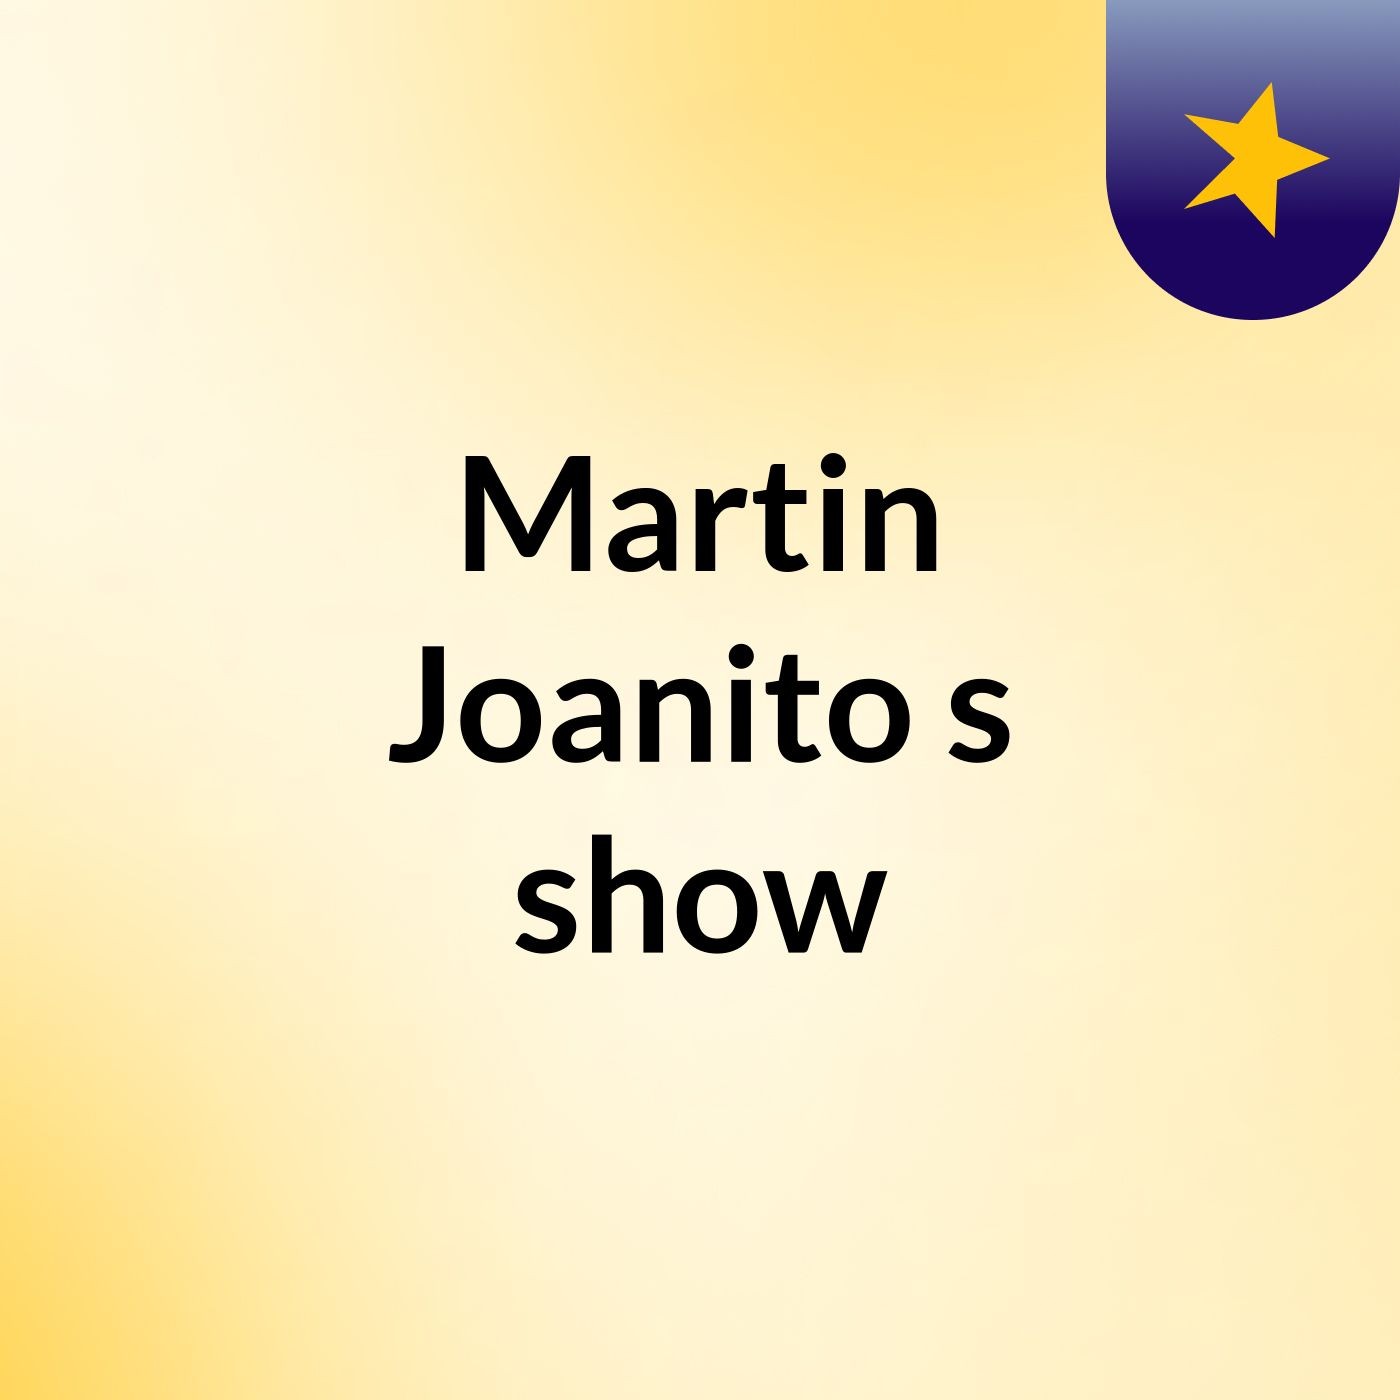 Martin Joanito's show